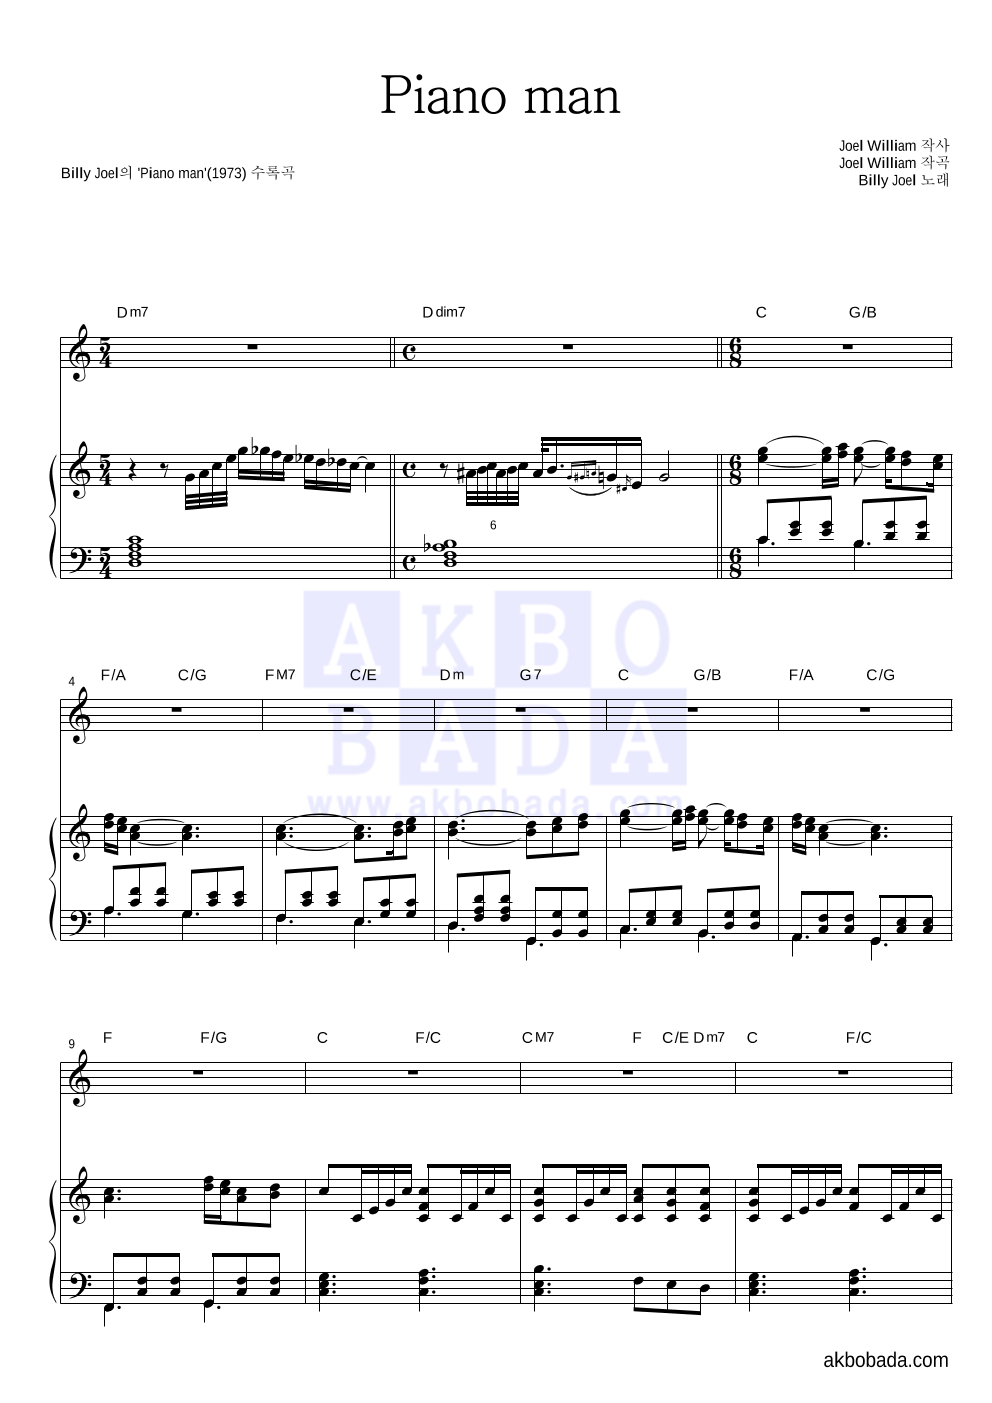 Billy Joel - Piano man 피아노 3단 악보 